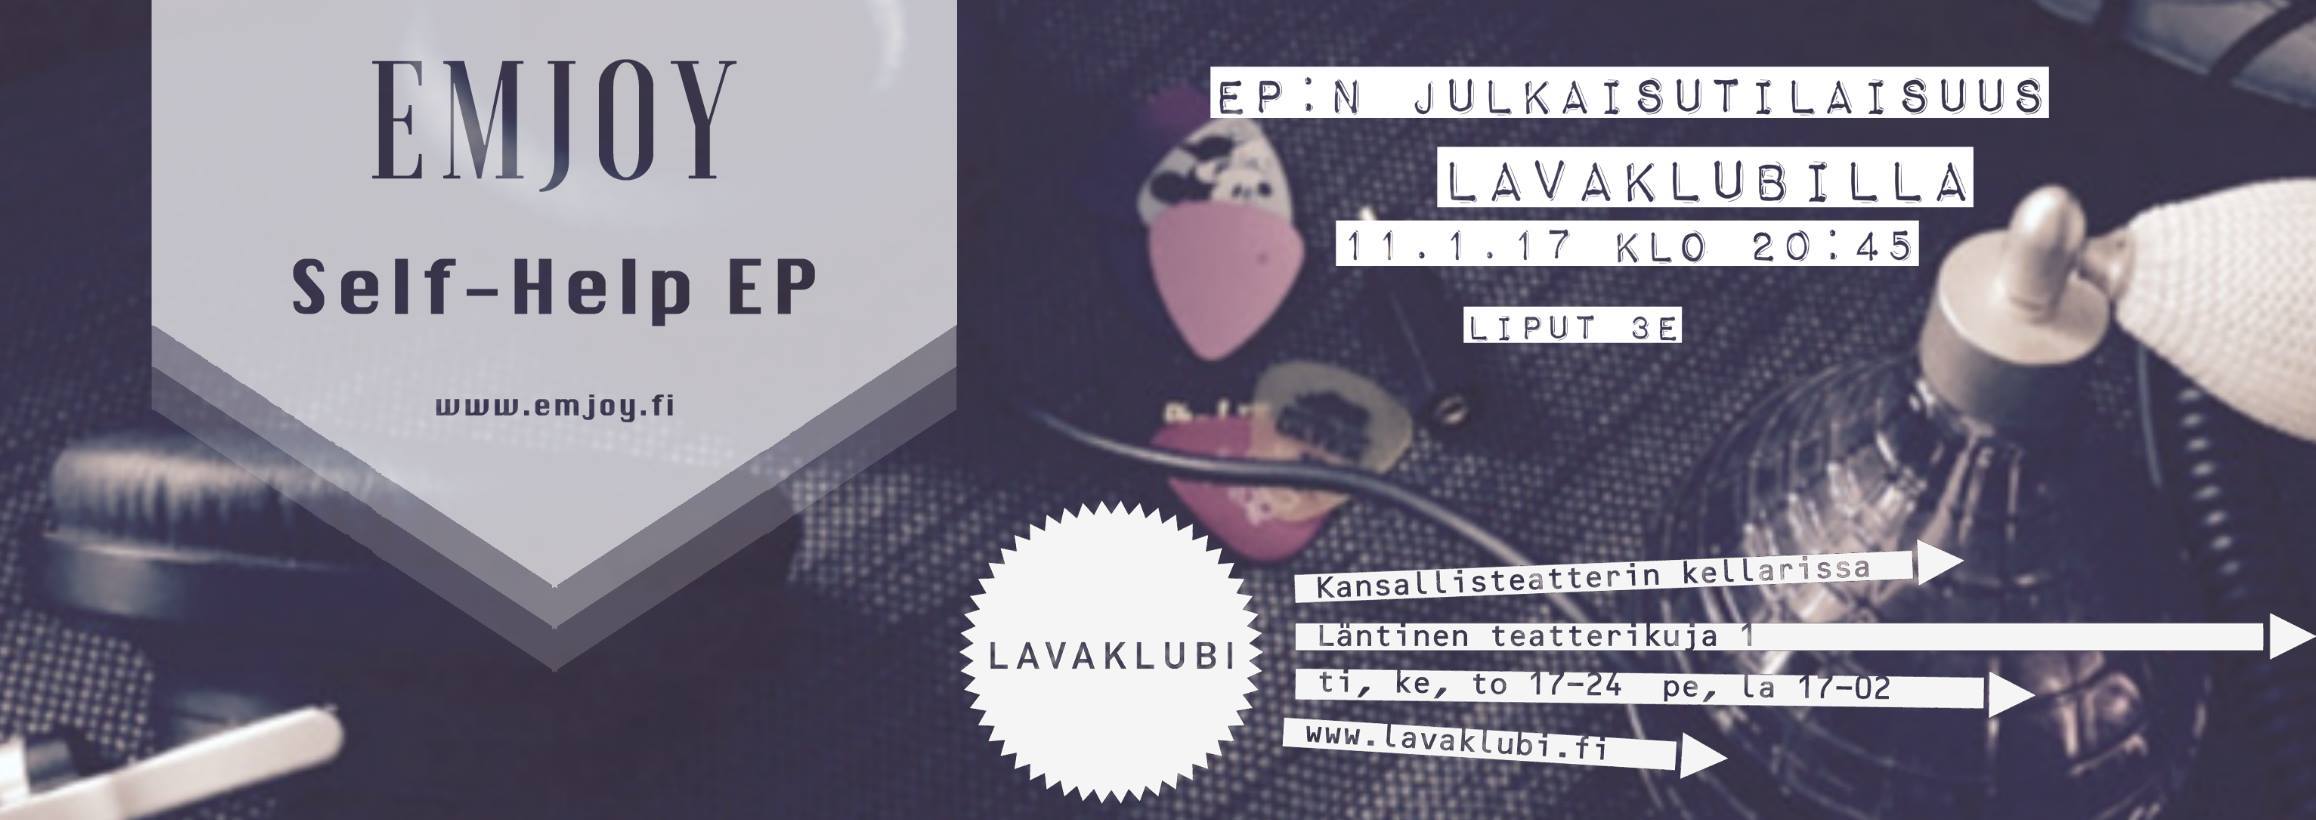 keikka lavaklubi emjoy self-help esiintyminen show 11.1.2016 20:45